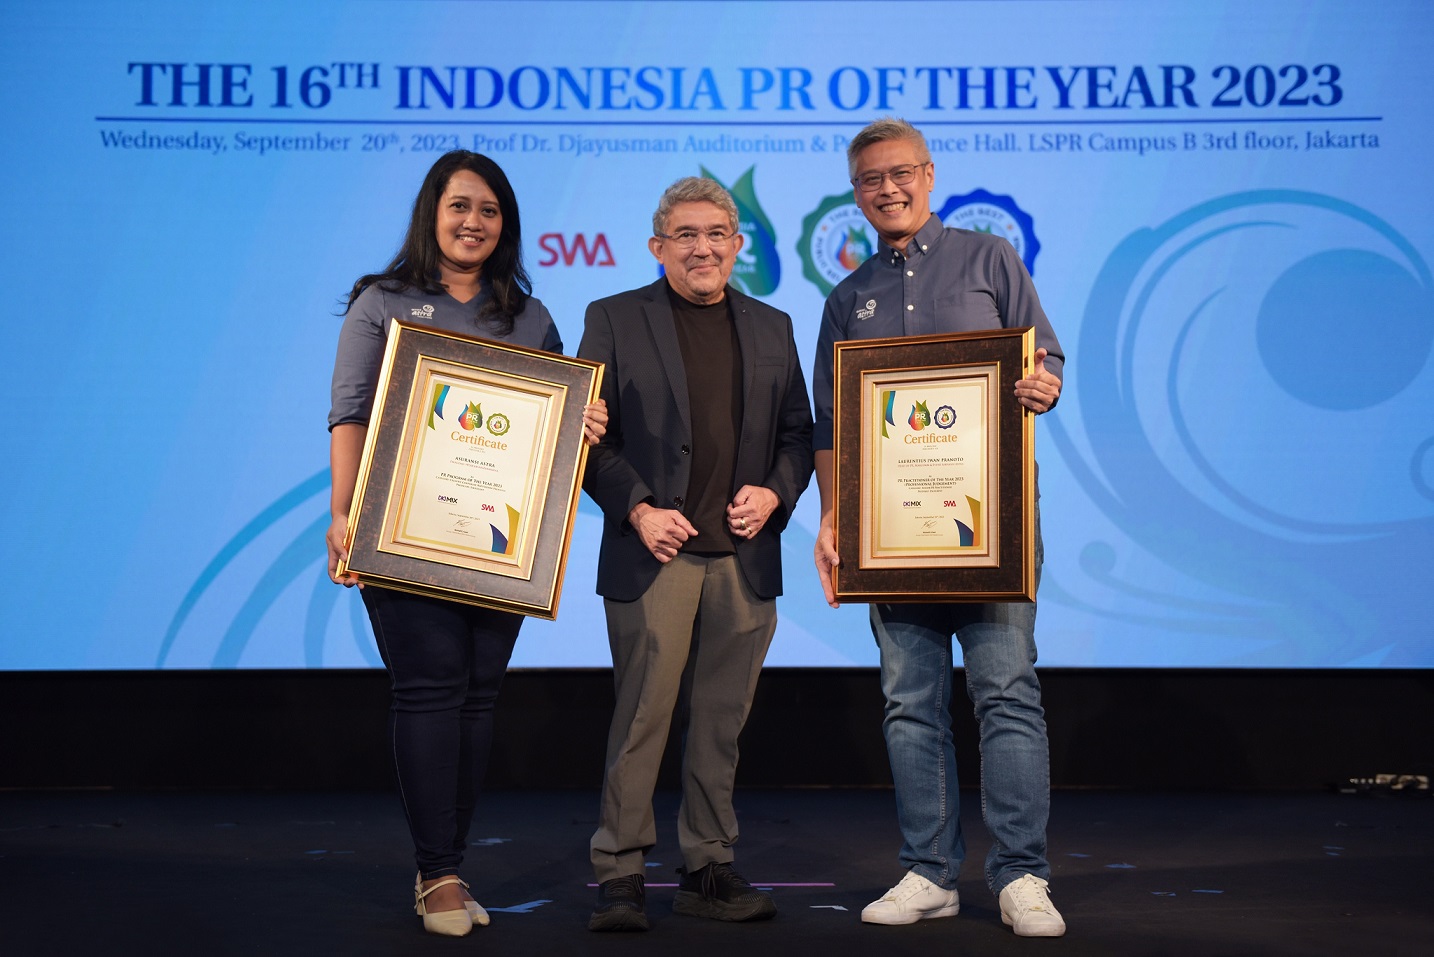 Asuransi Astra Sabet Dua Penghargaan di Perhelatan PR of The Year 2023 Oleh Majalah MIX Marcomm